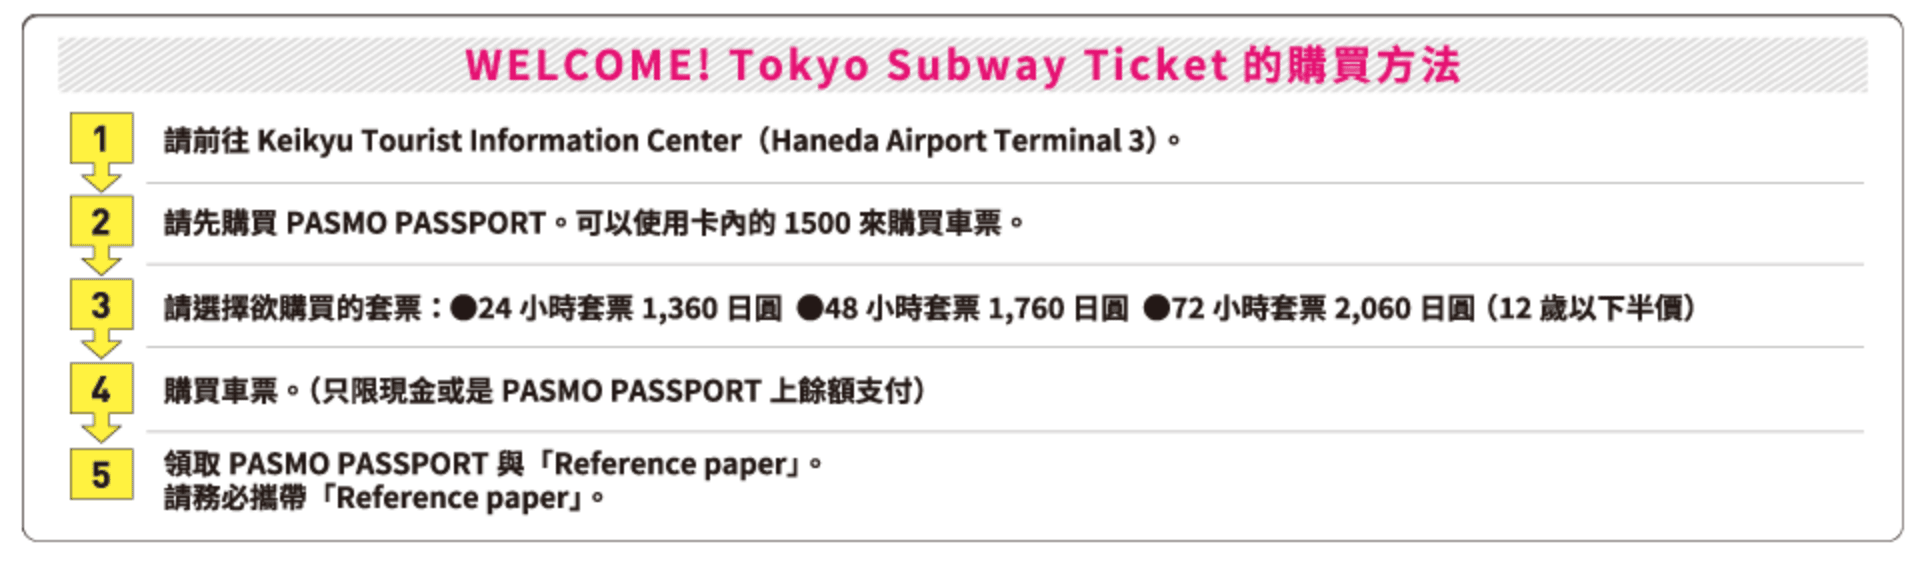 京急電鐵Welcome! Tokyo Subway Ticket購買方法